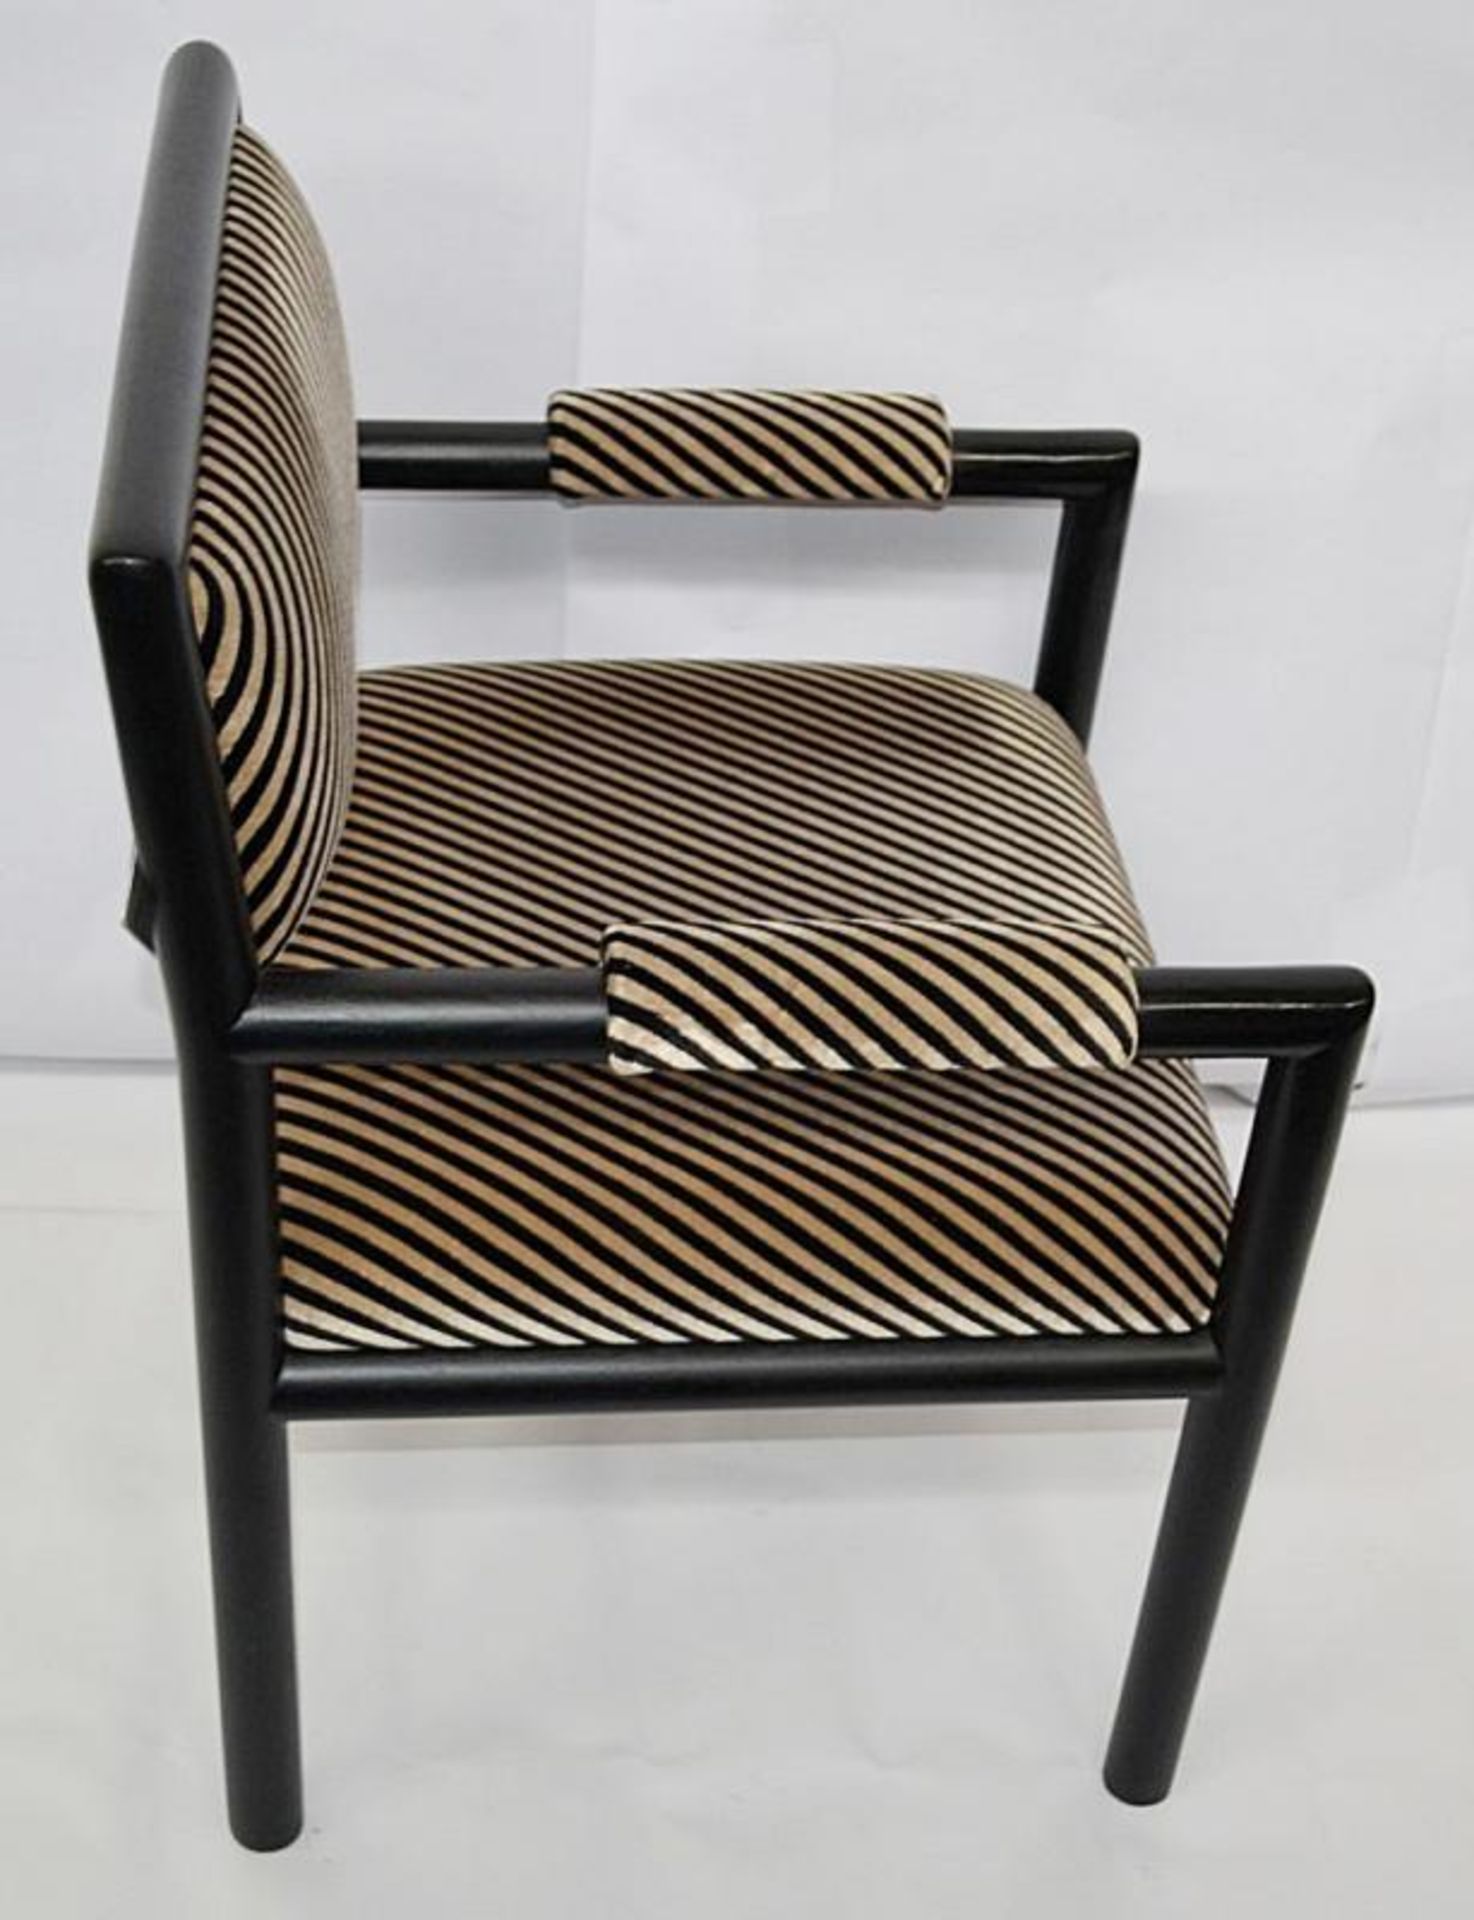 1 x KELLY WEARSTLER Croft Occasional Chair - Ref: 5163501 - CL087 - Location: Altrincham WA14 - Orig - Image 22 of 24